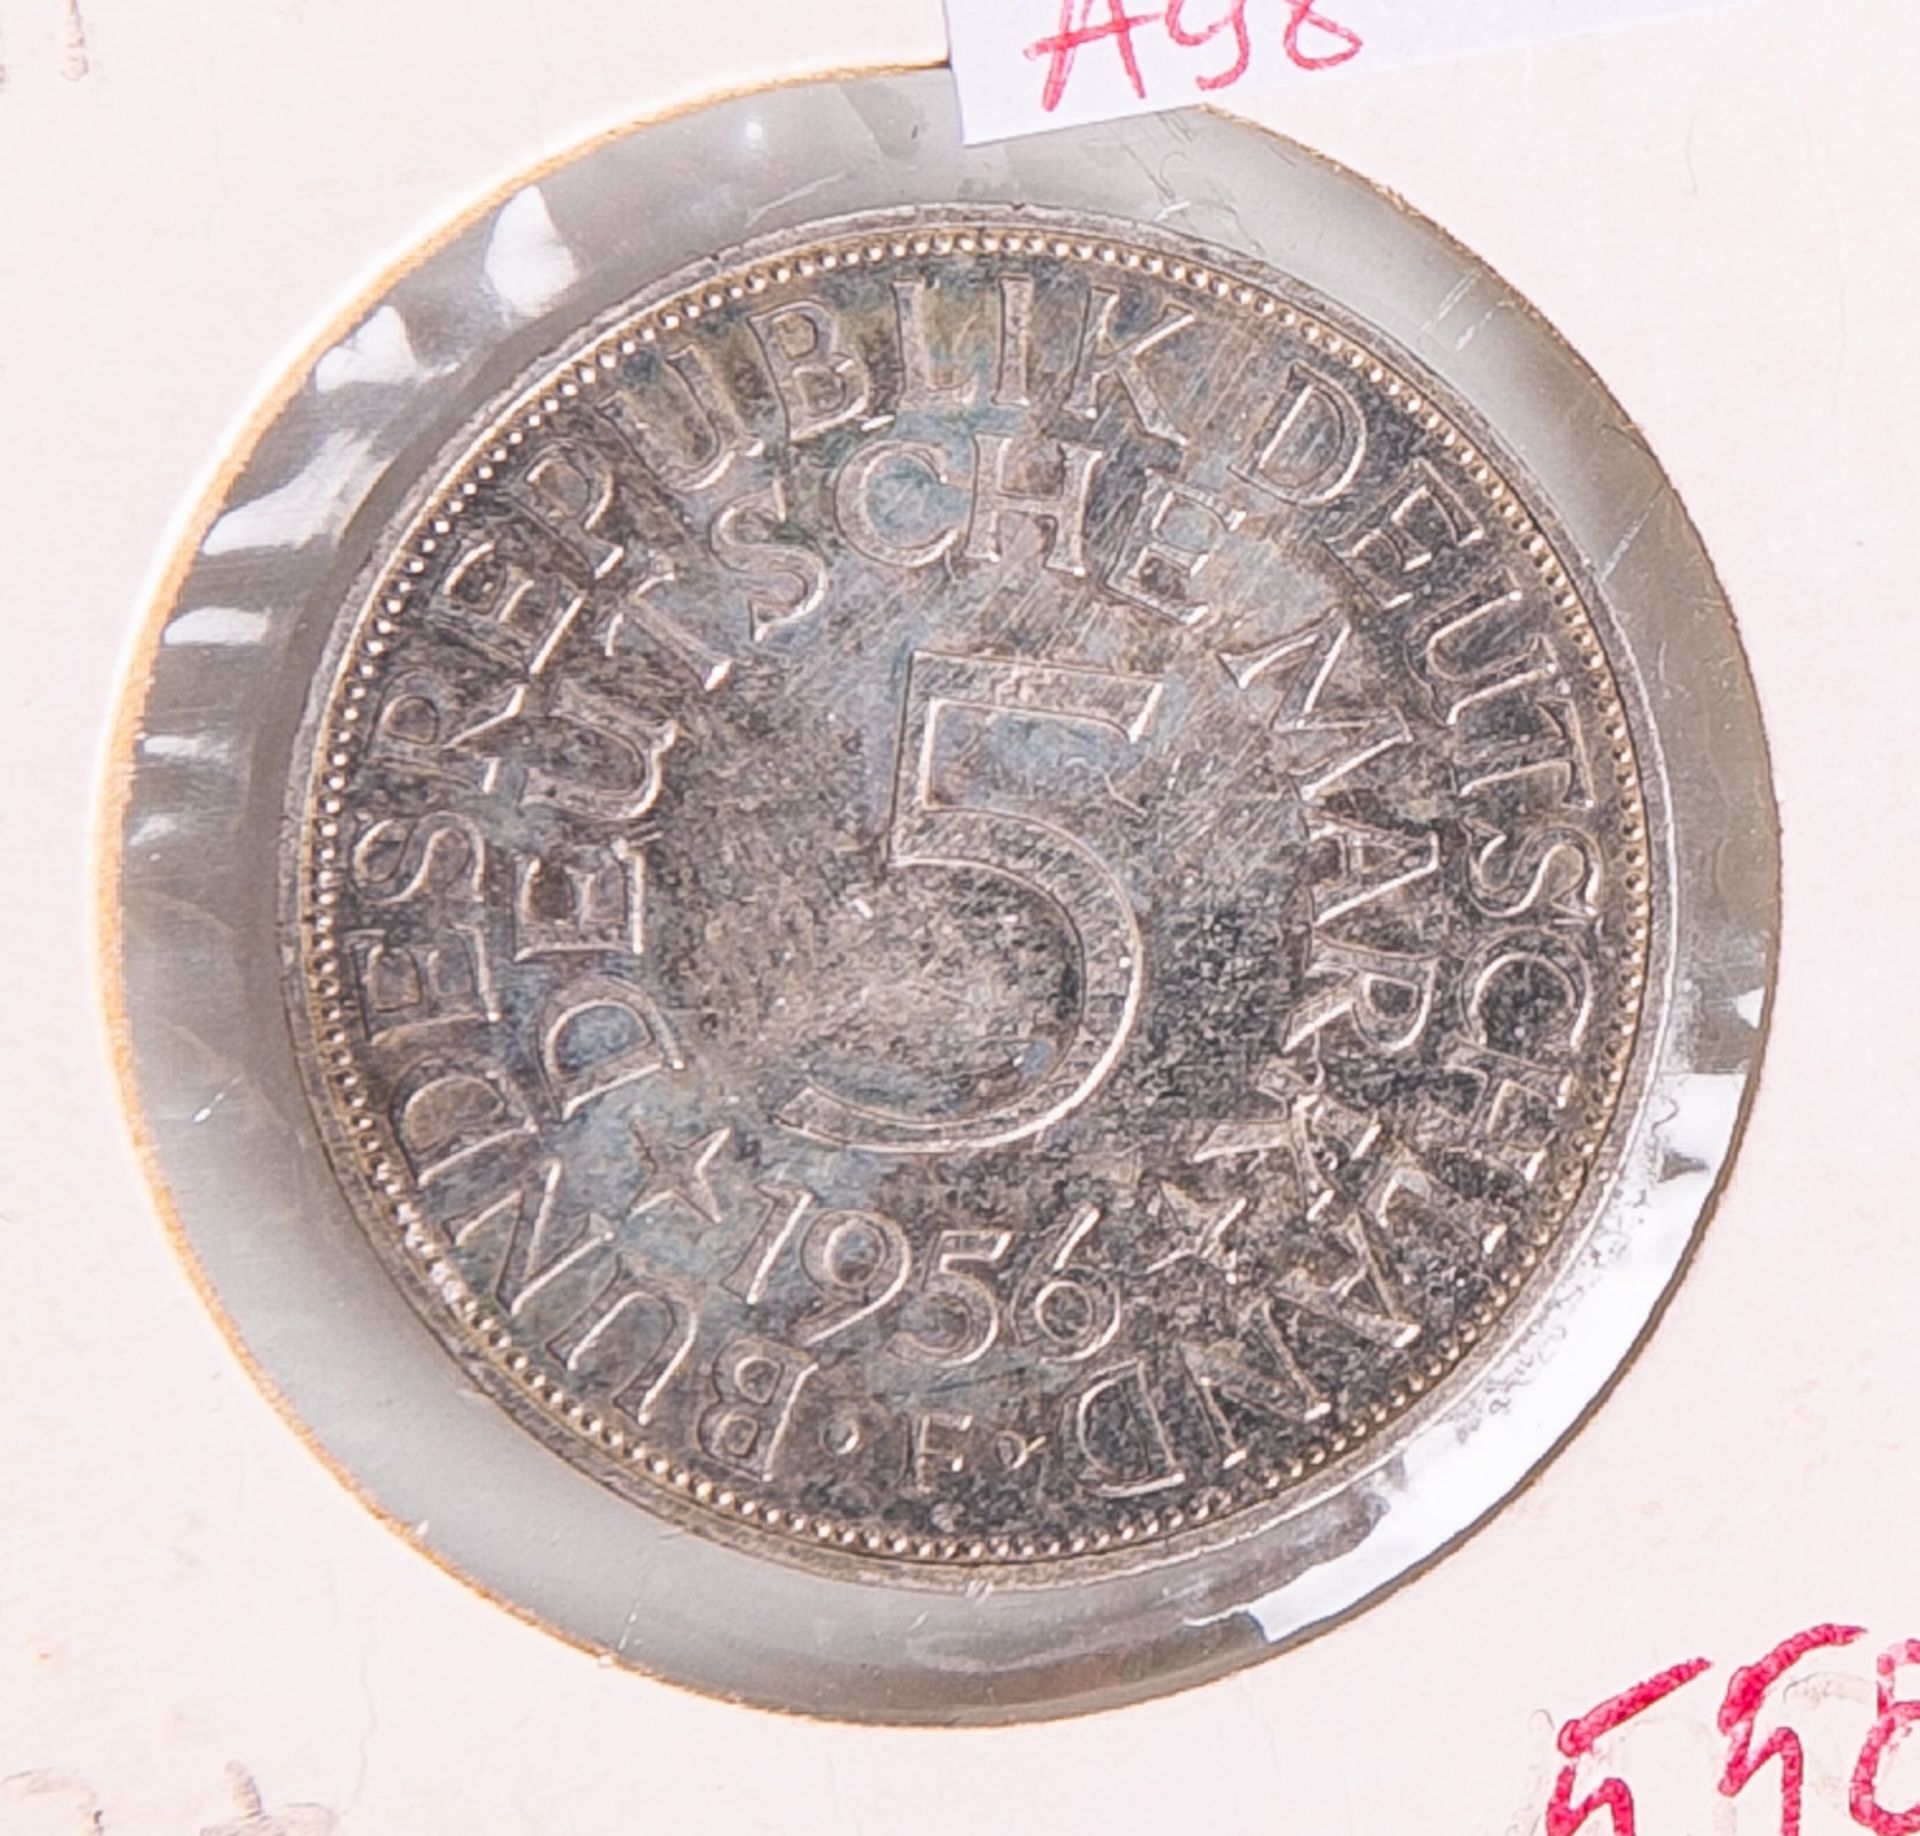 5 DM-Münze "Silberadler" (BRD, 1956), Münzprägestätte: F, eingeschweißt. Vz.